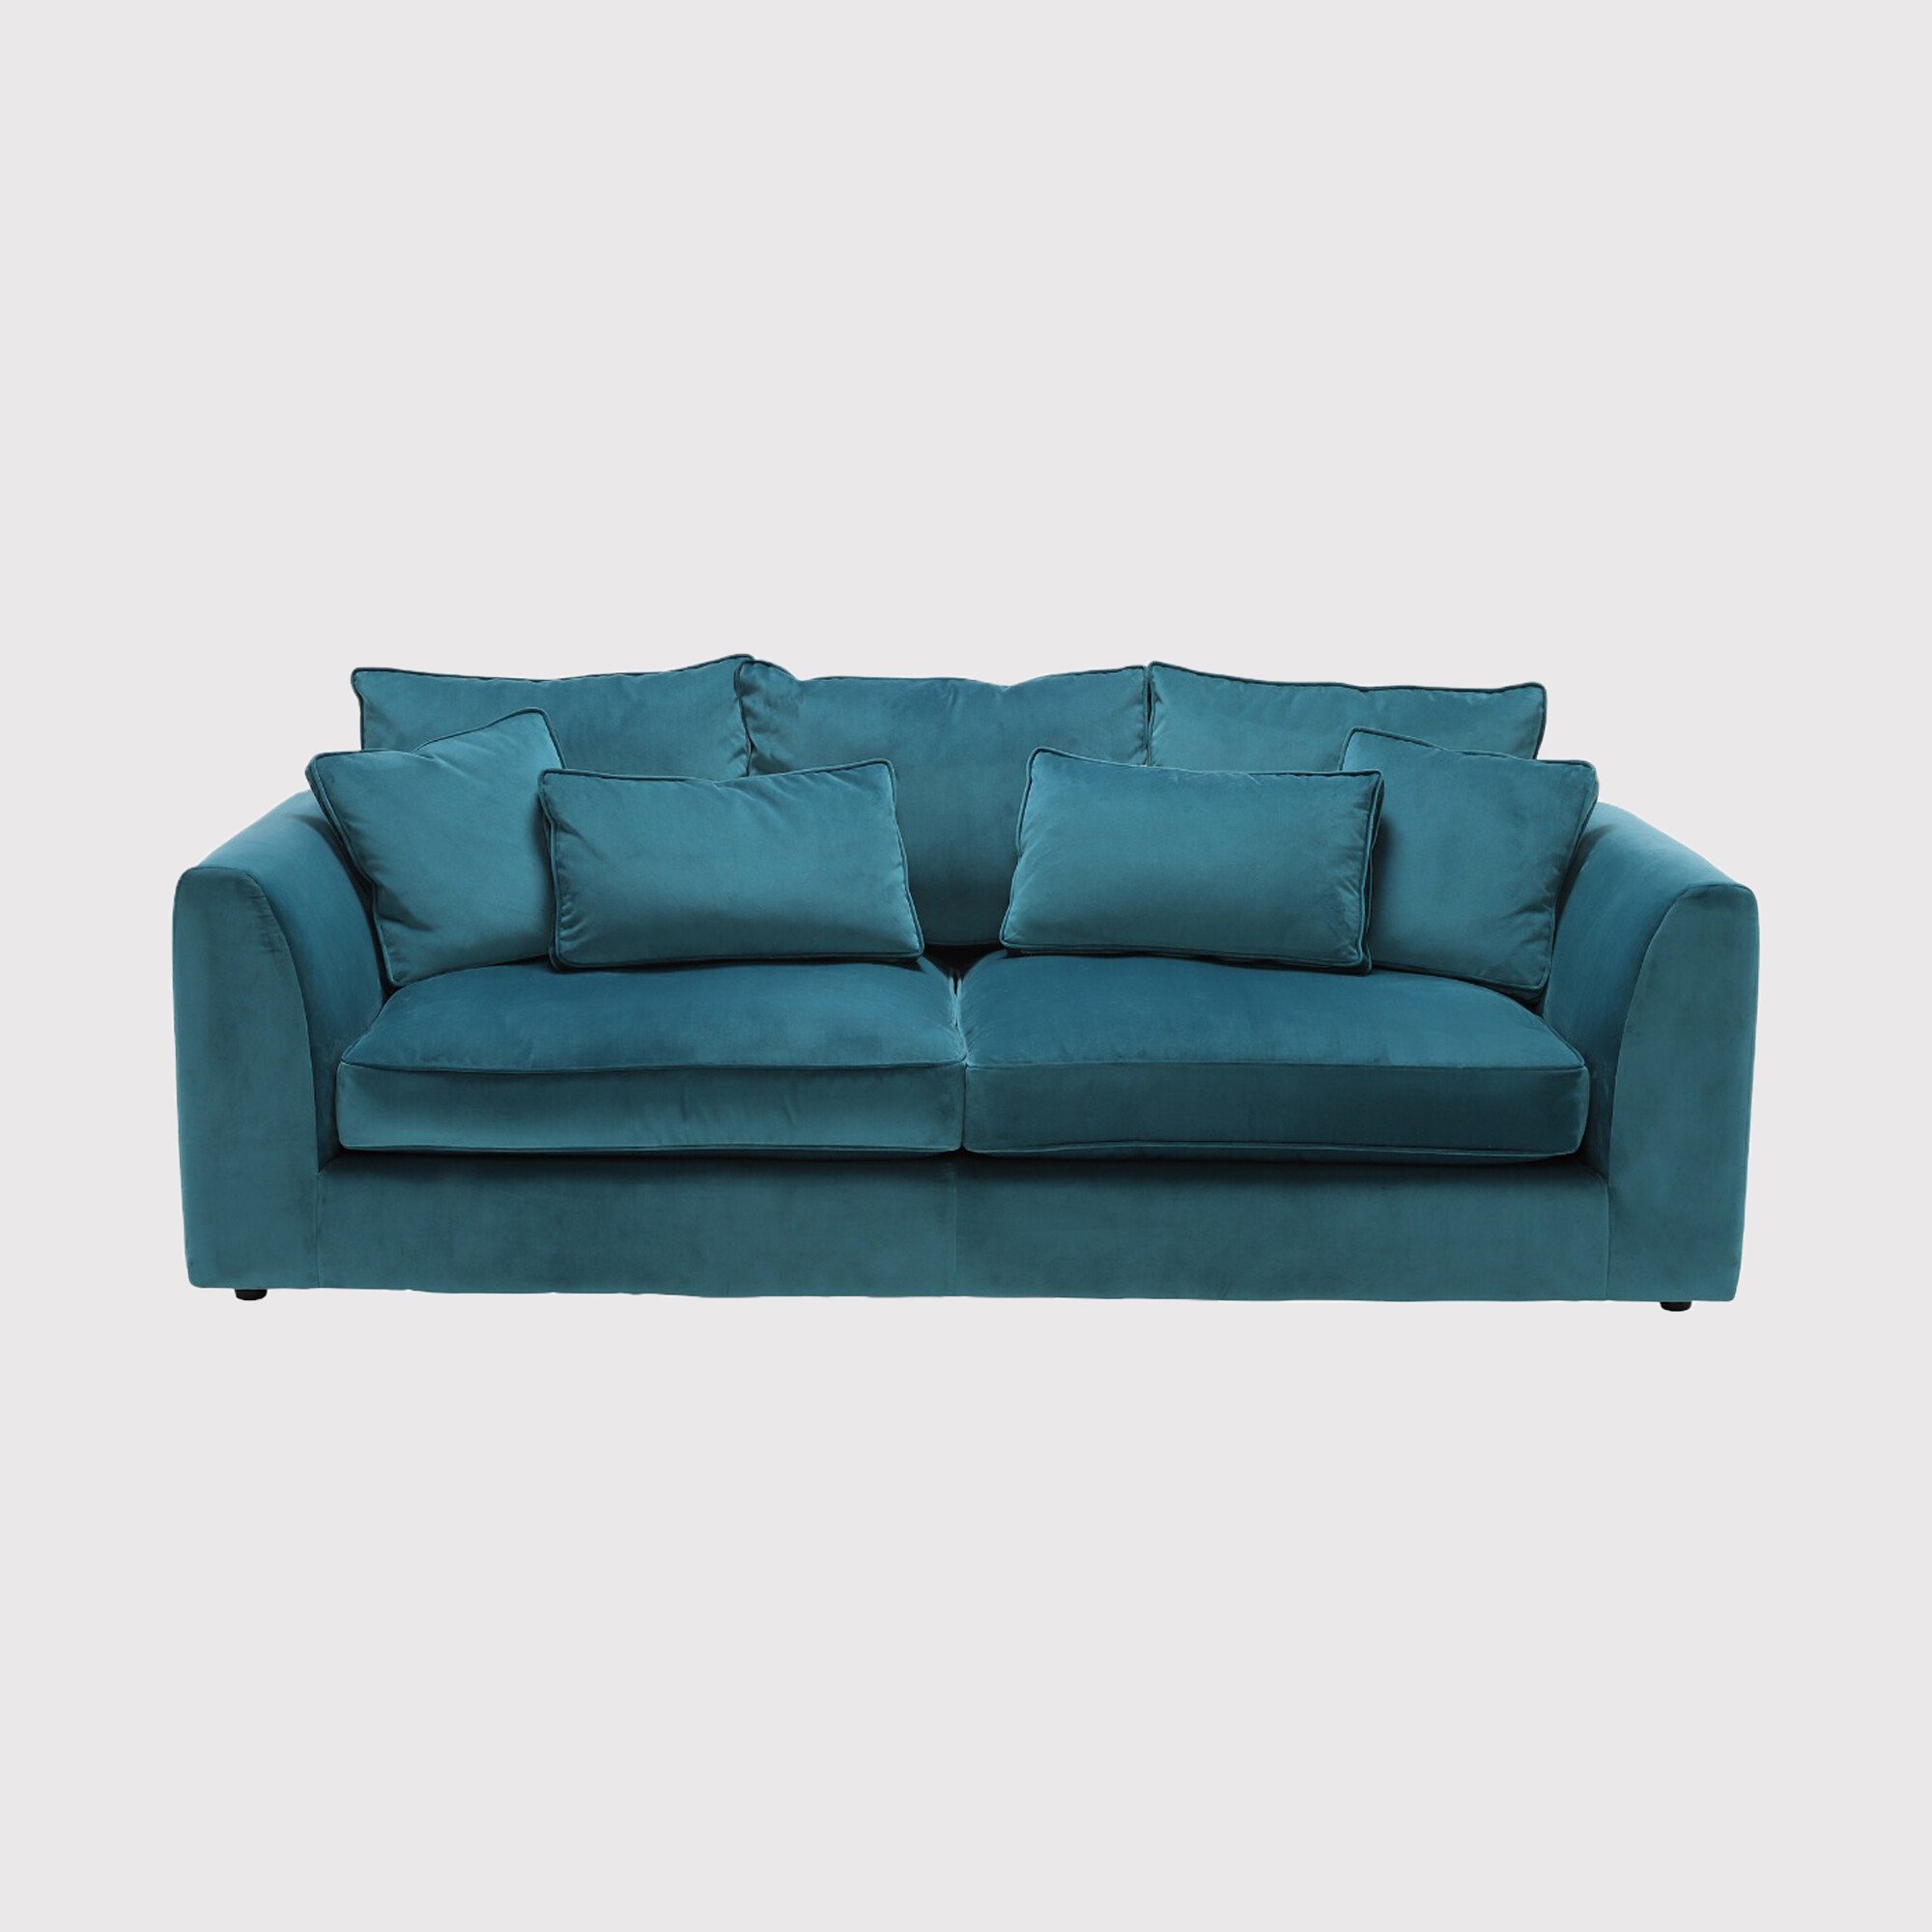 Harrington Large Sofa, Teal Fabric | Barker & Stonehouse